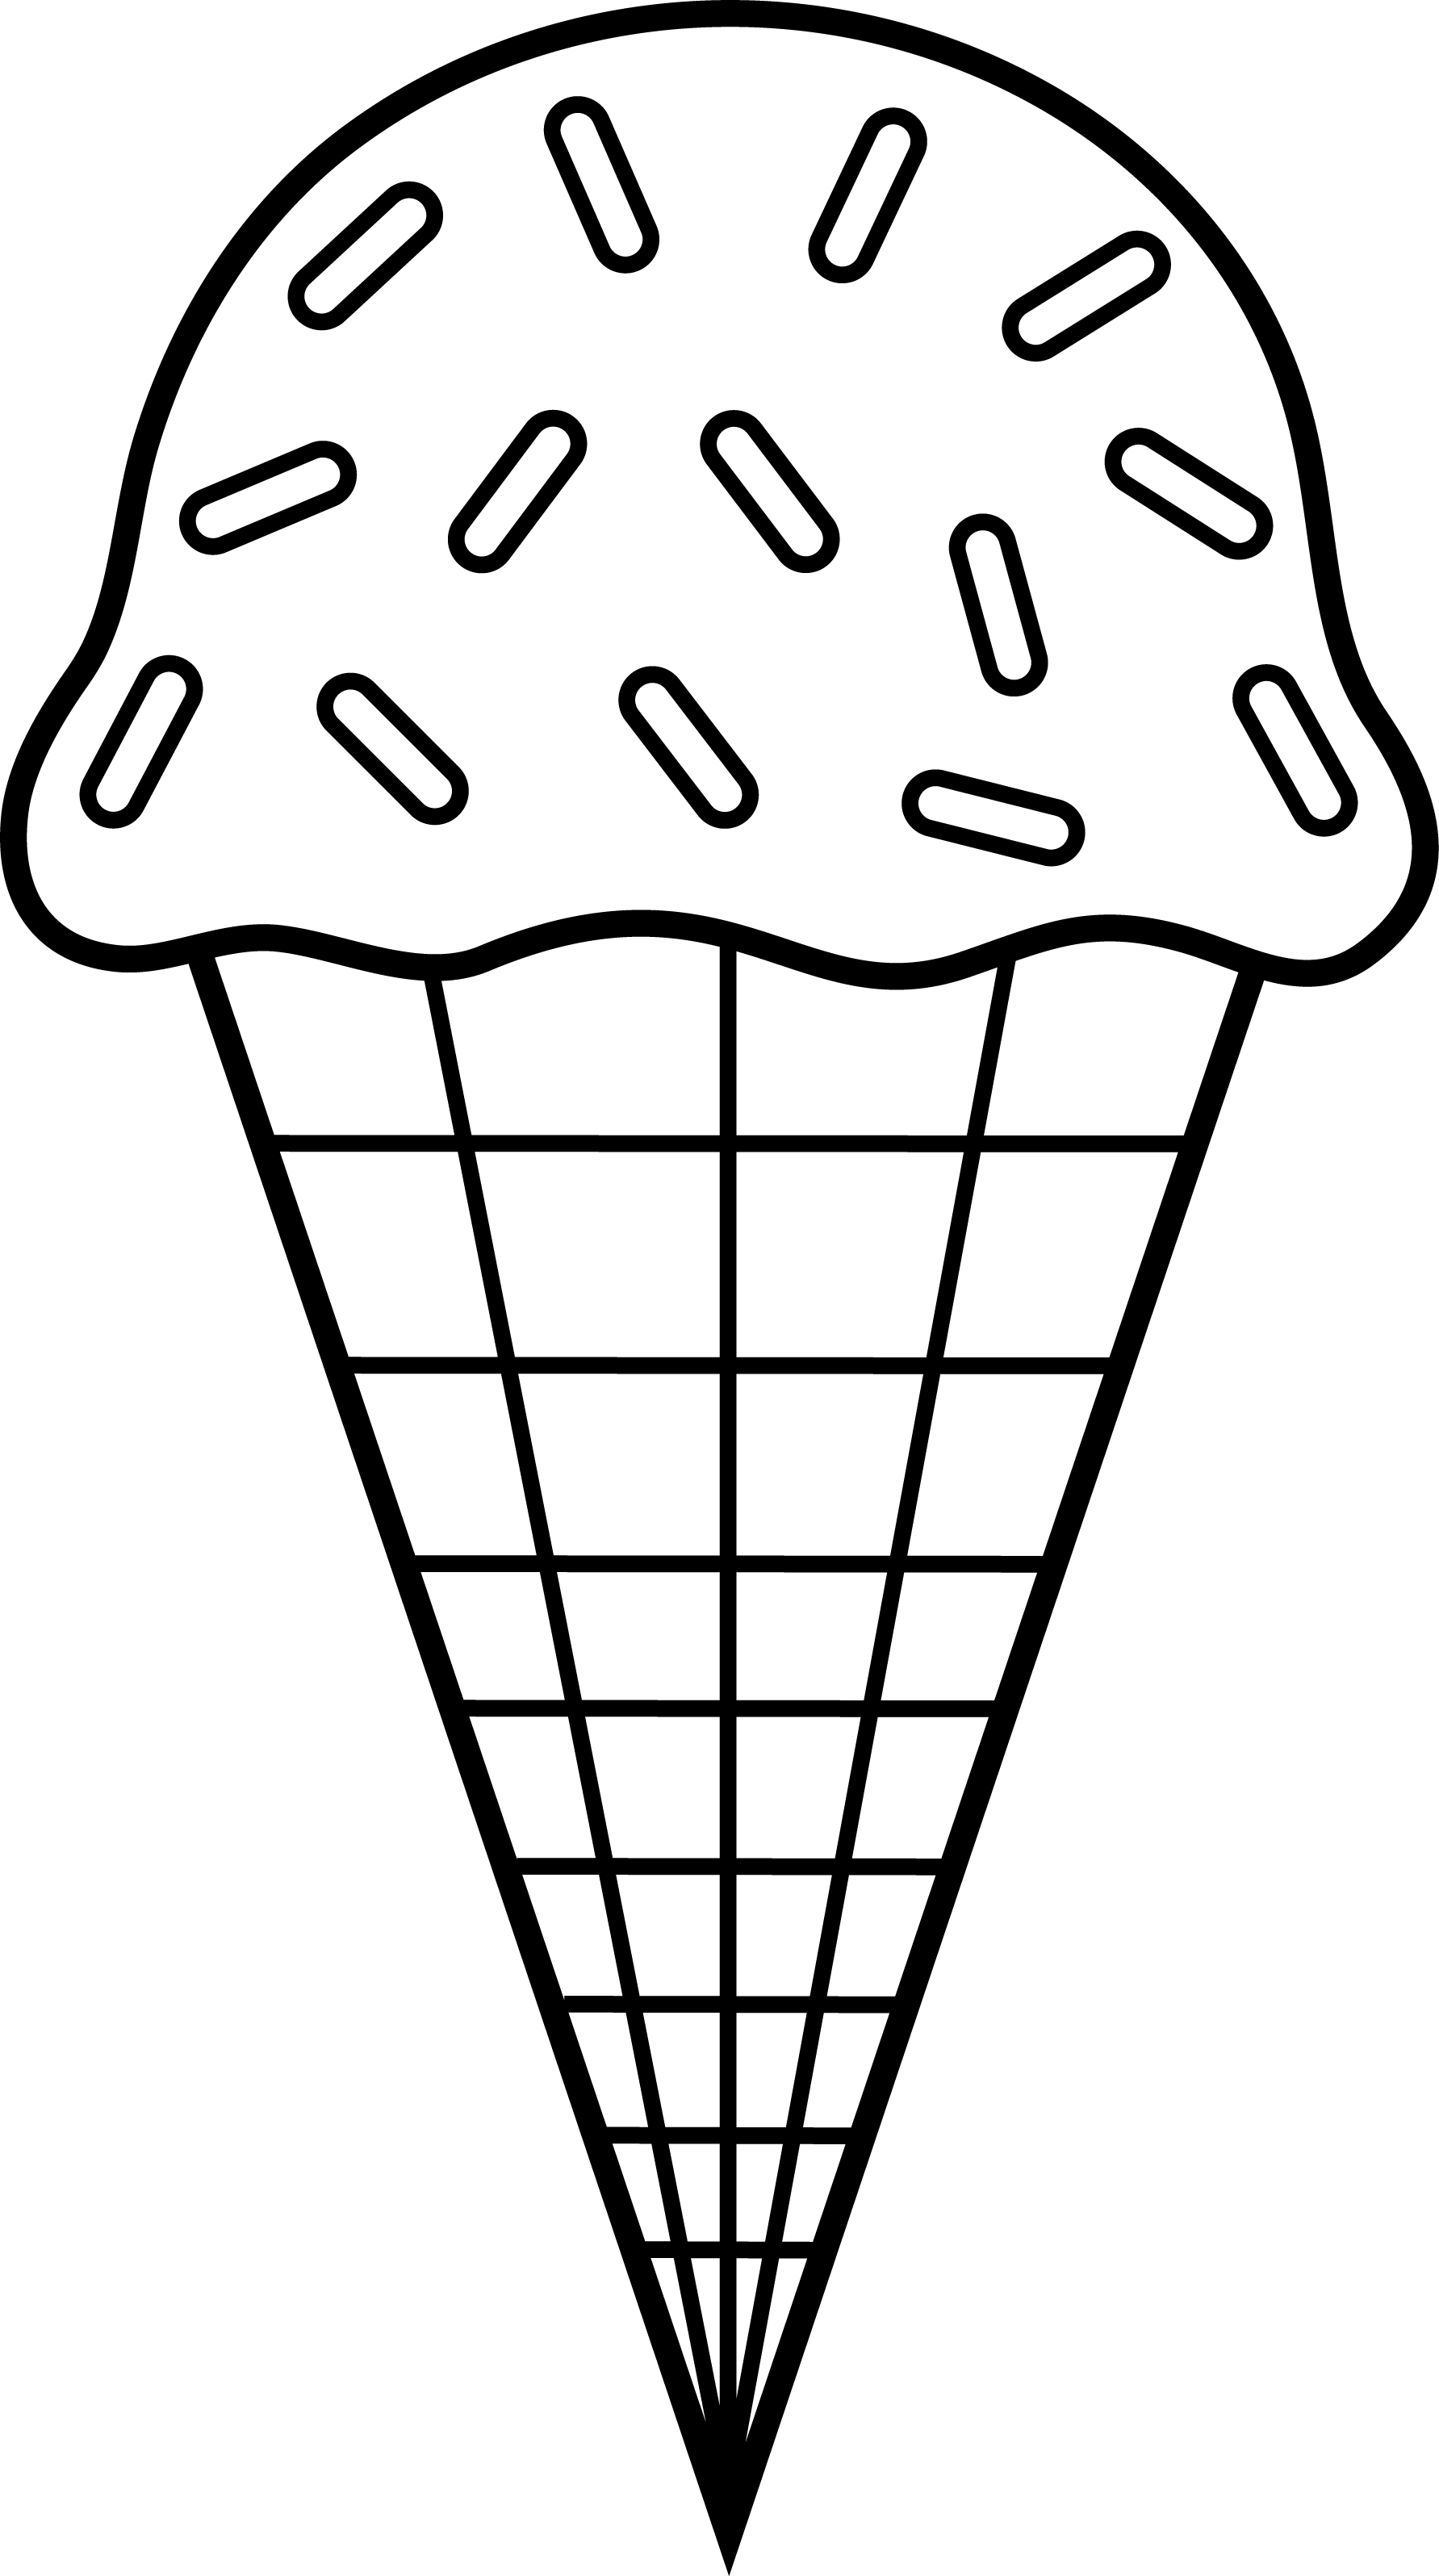 Icecream Cone PNG Black And White - 150288